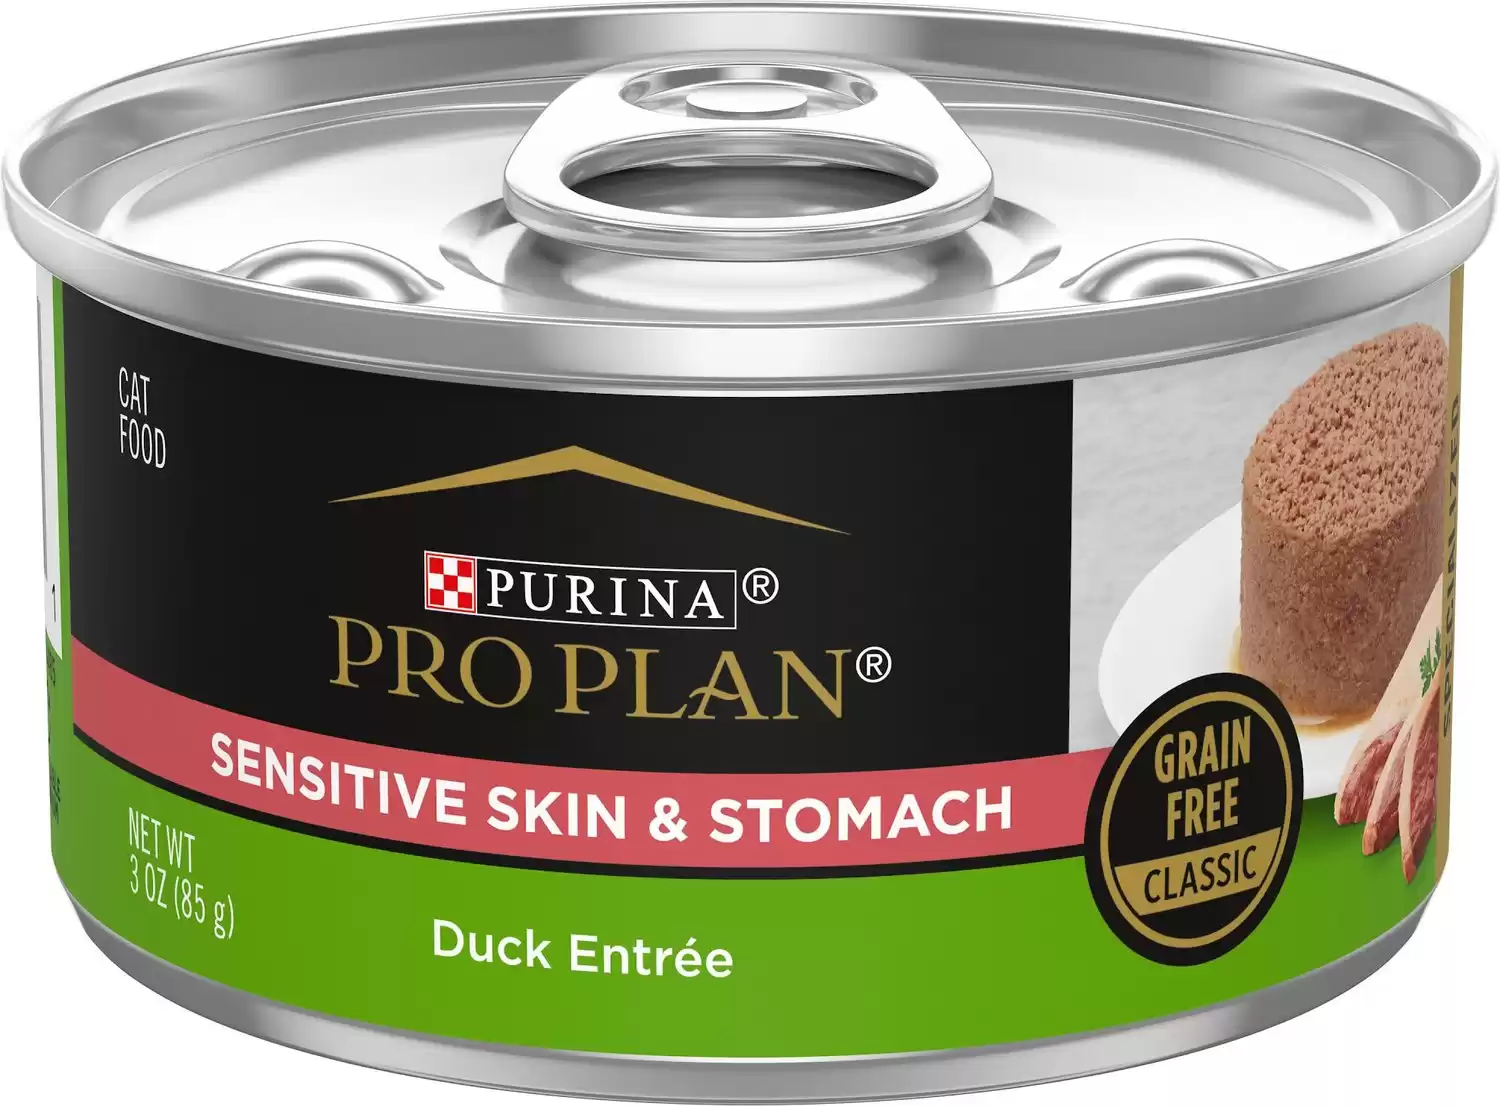 Purina Pro Plan Focus Sensitive Skin & Stomach